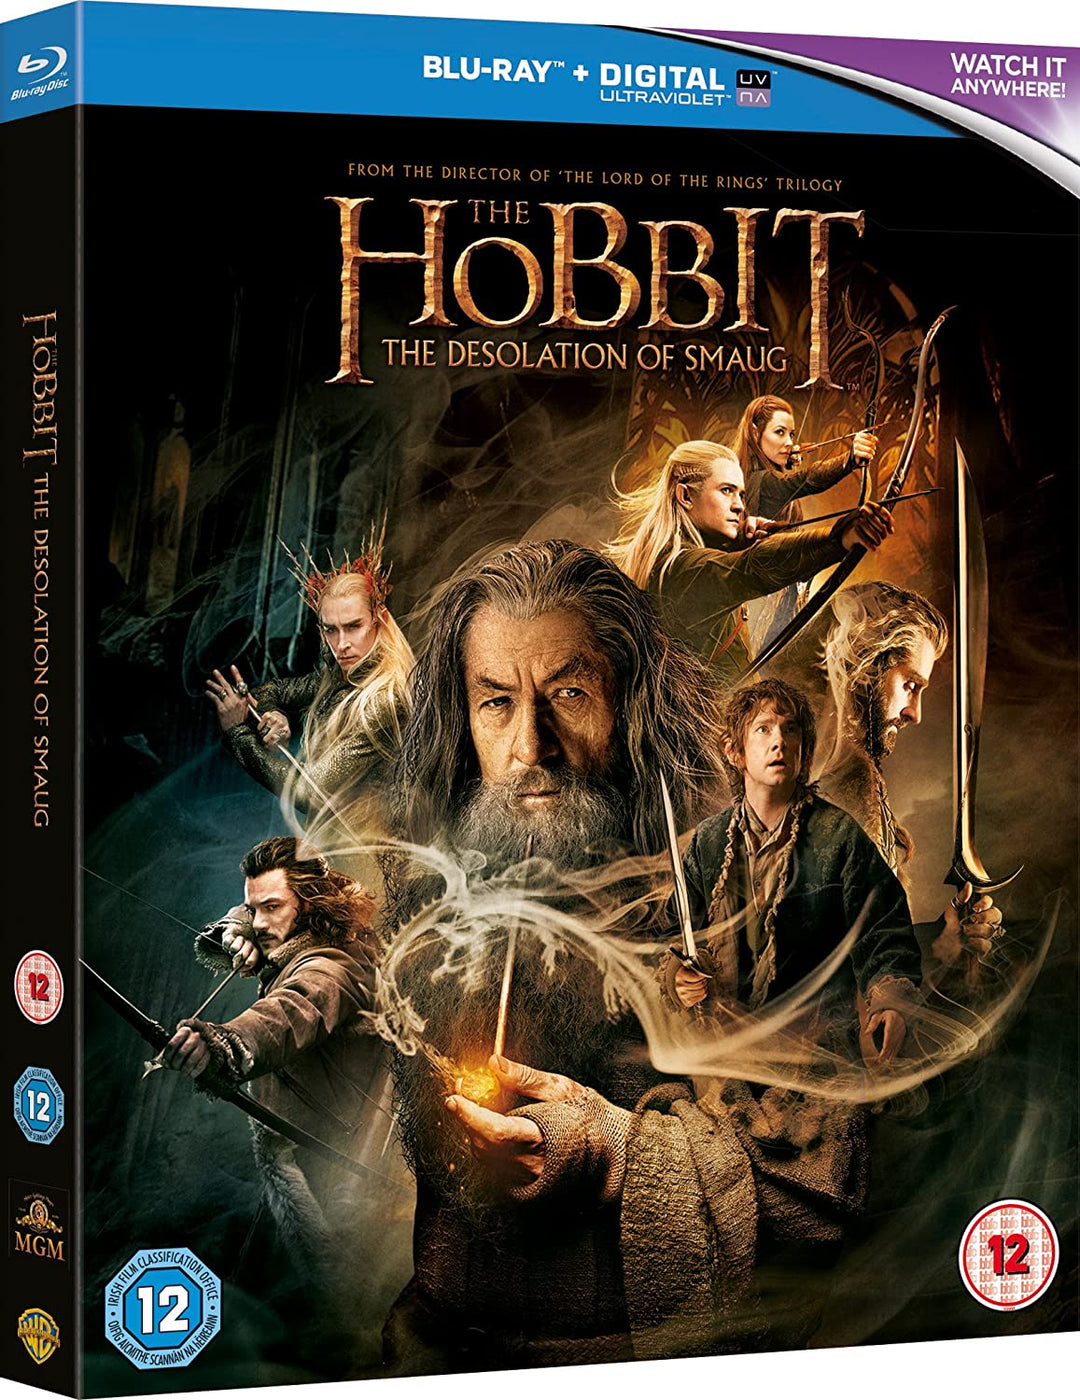 The Hobbit: The Desolation of Smaug [Blu-ray + UV Copy] [2013] [Region Free]